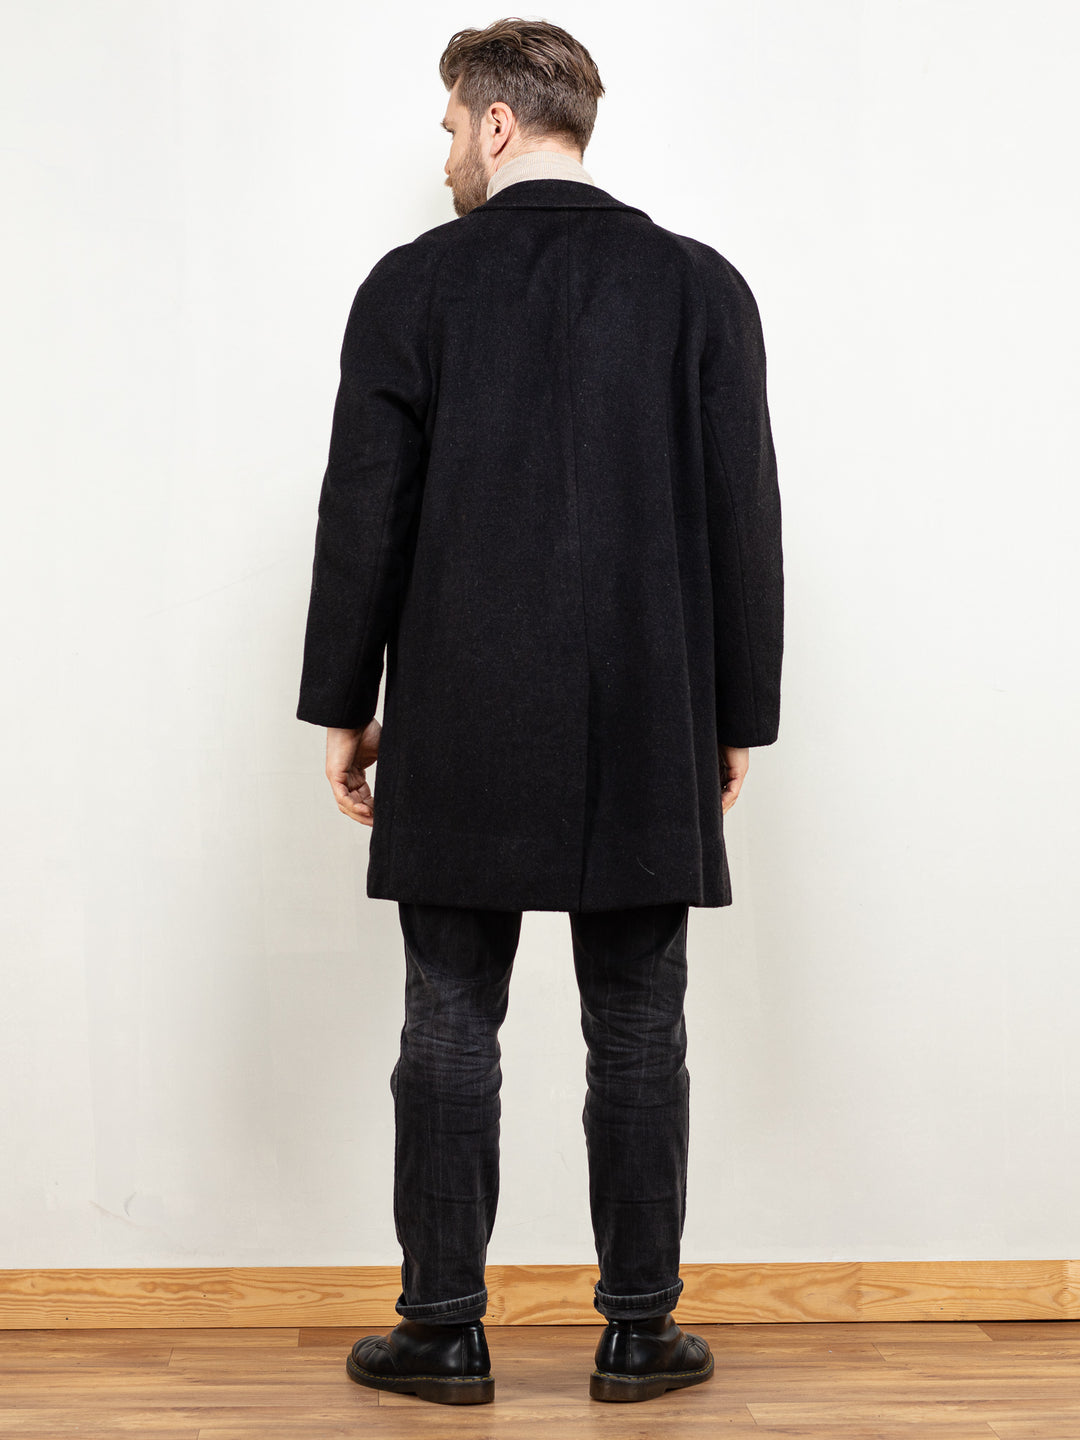 Wool Coat Men 80s vintage dark grey wool blend maxi long coat minimalist classic style coat men sustainable clothing size large